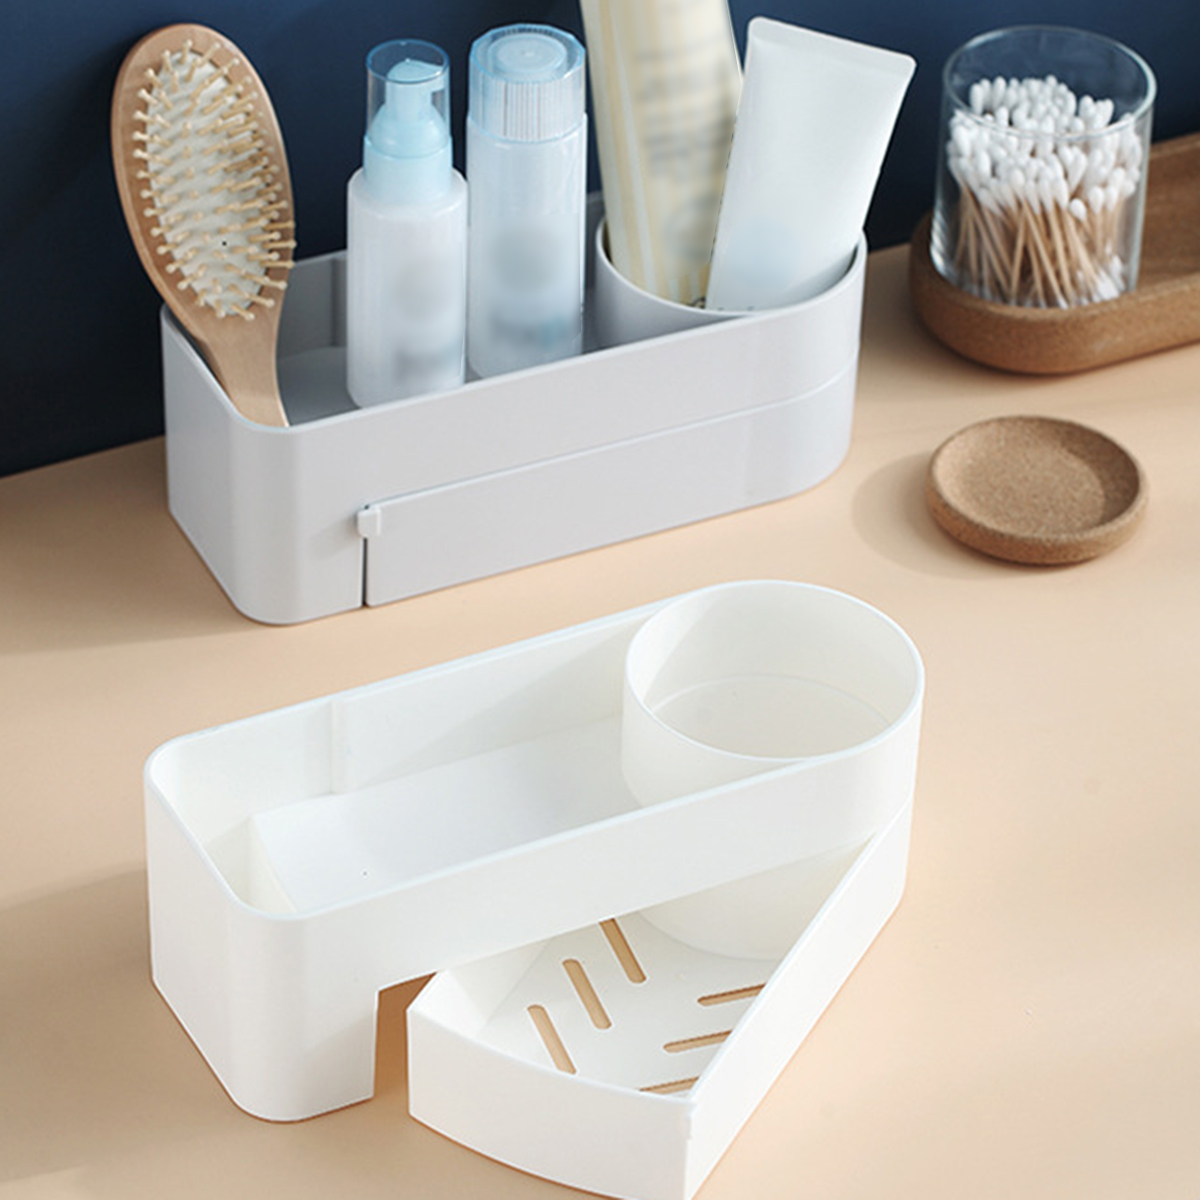 Bakeey-Non-perforated-Rotatable-Bathroom-Organizer-Wall-Mounted-Kitchen-Storage-Shelf-Shower-Shampoo-1659401-5